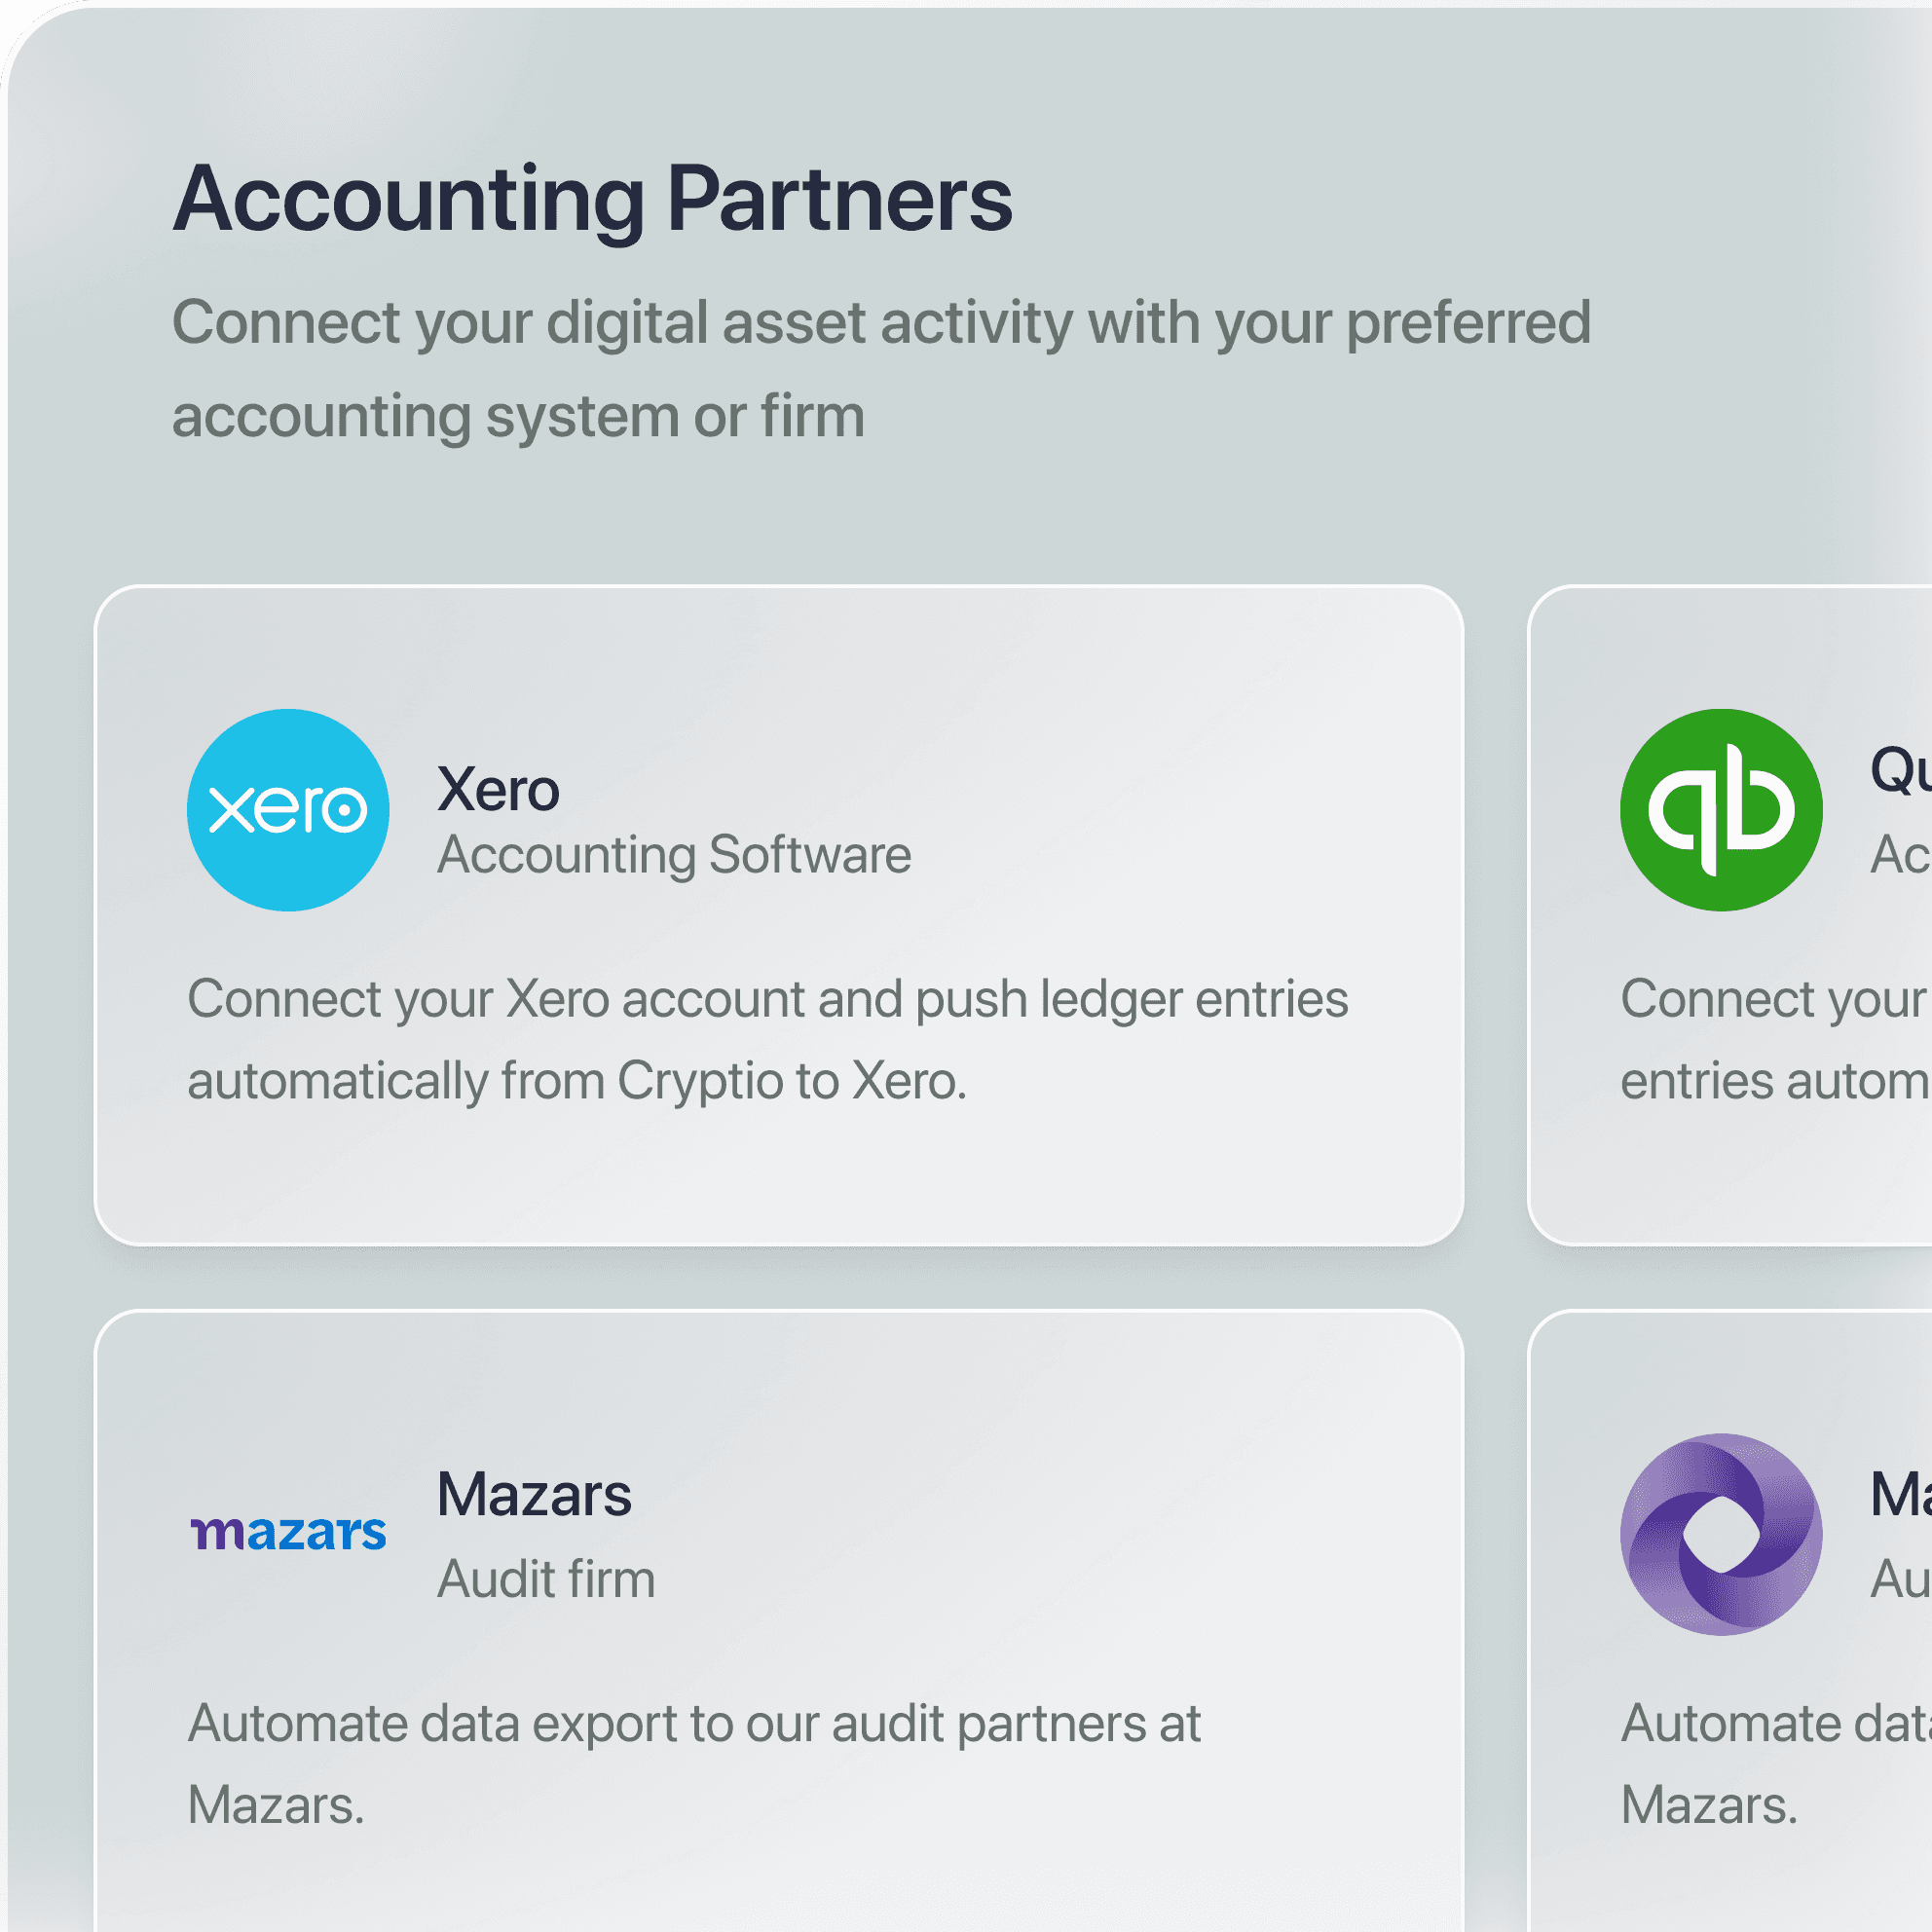 Some accounting partners of Cryptio: Xero, Quickbooks, Mazars